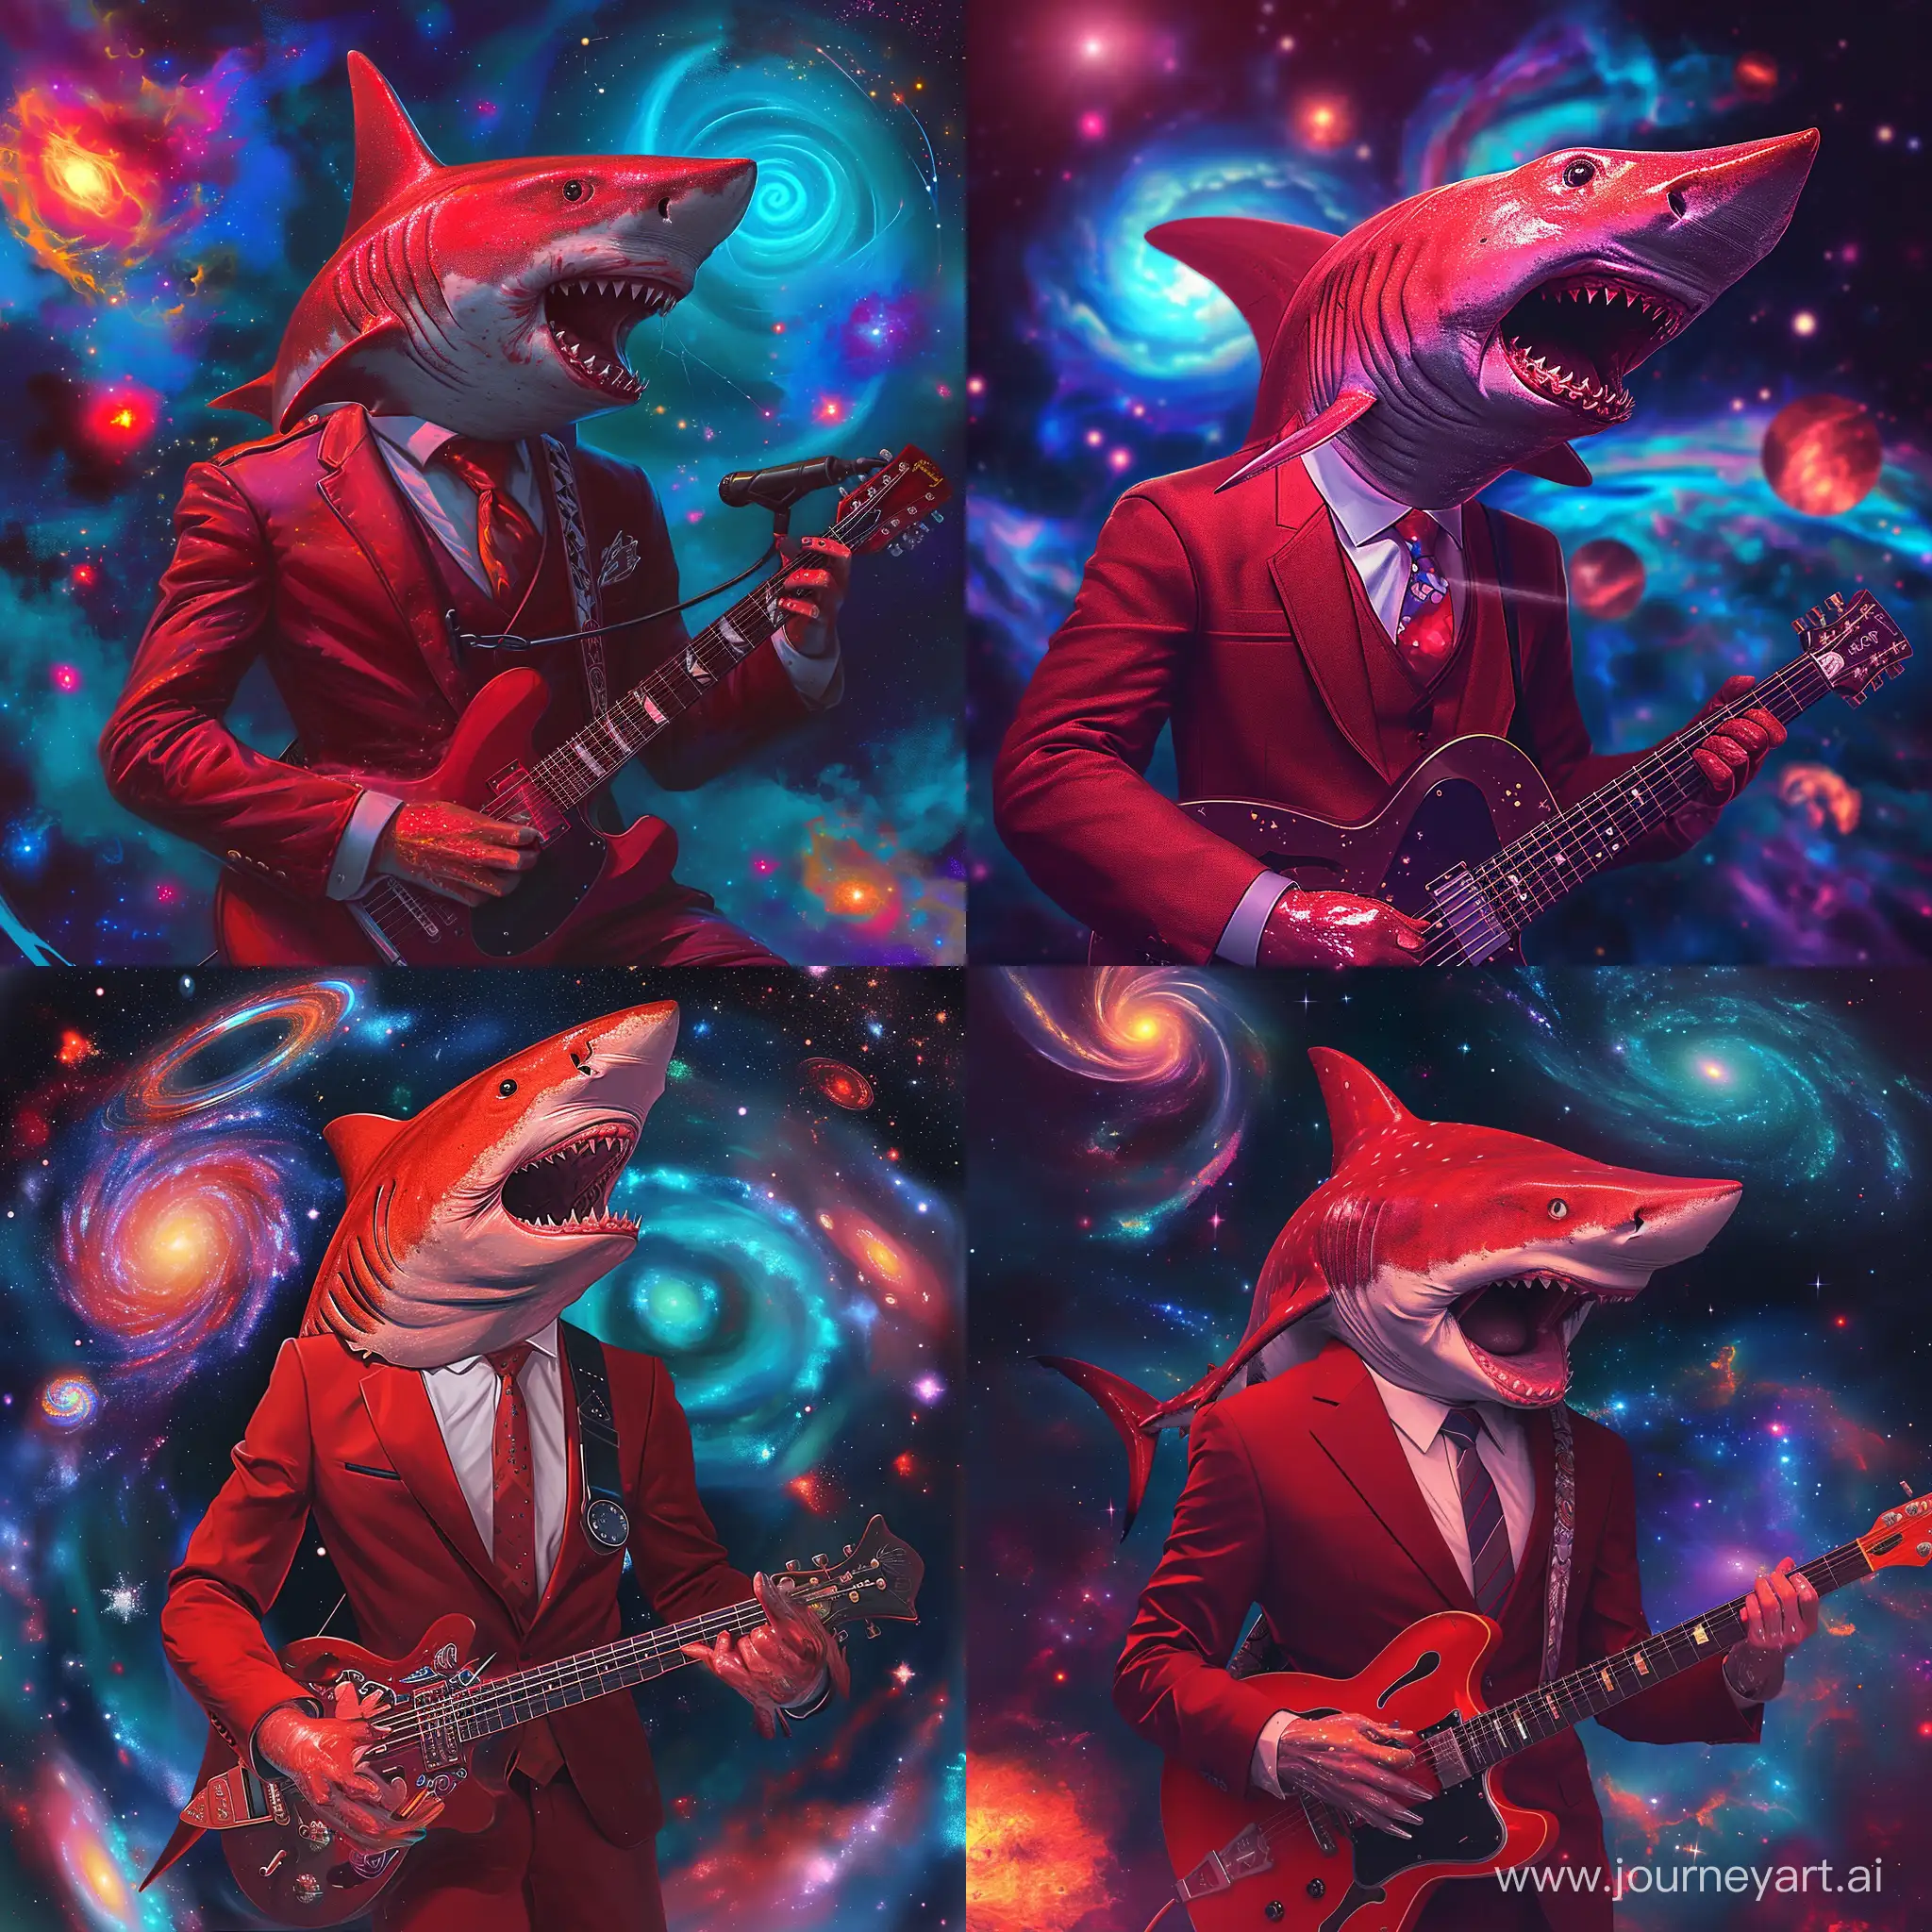 Mesmerizing-Red-Shark-Playing-Guitar-in-Cosmic-Splendor